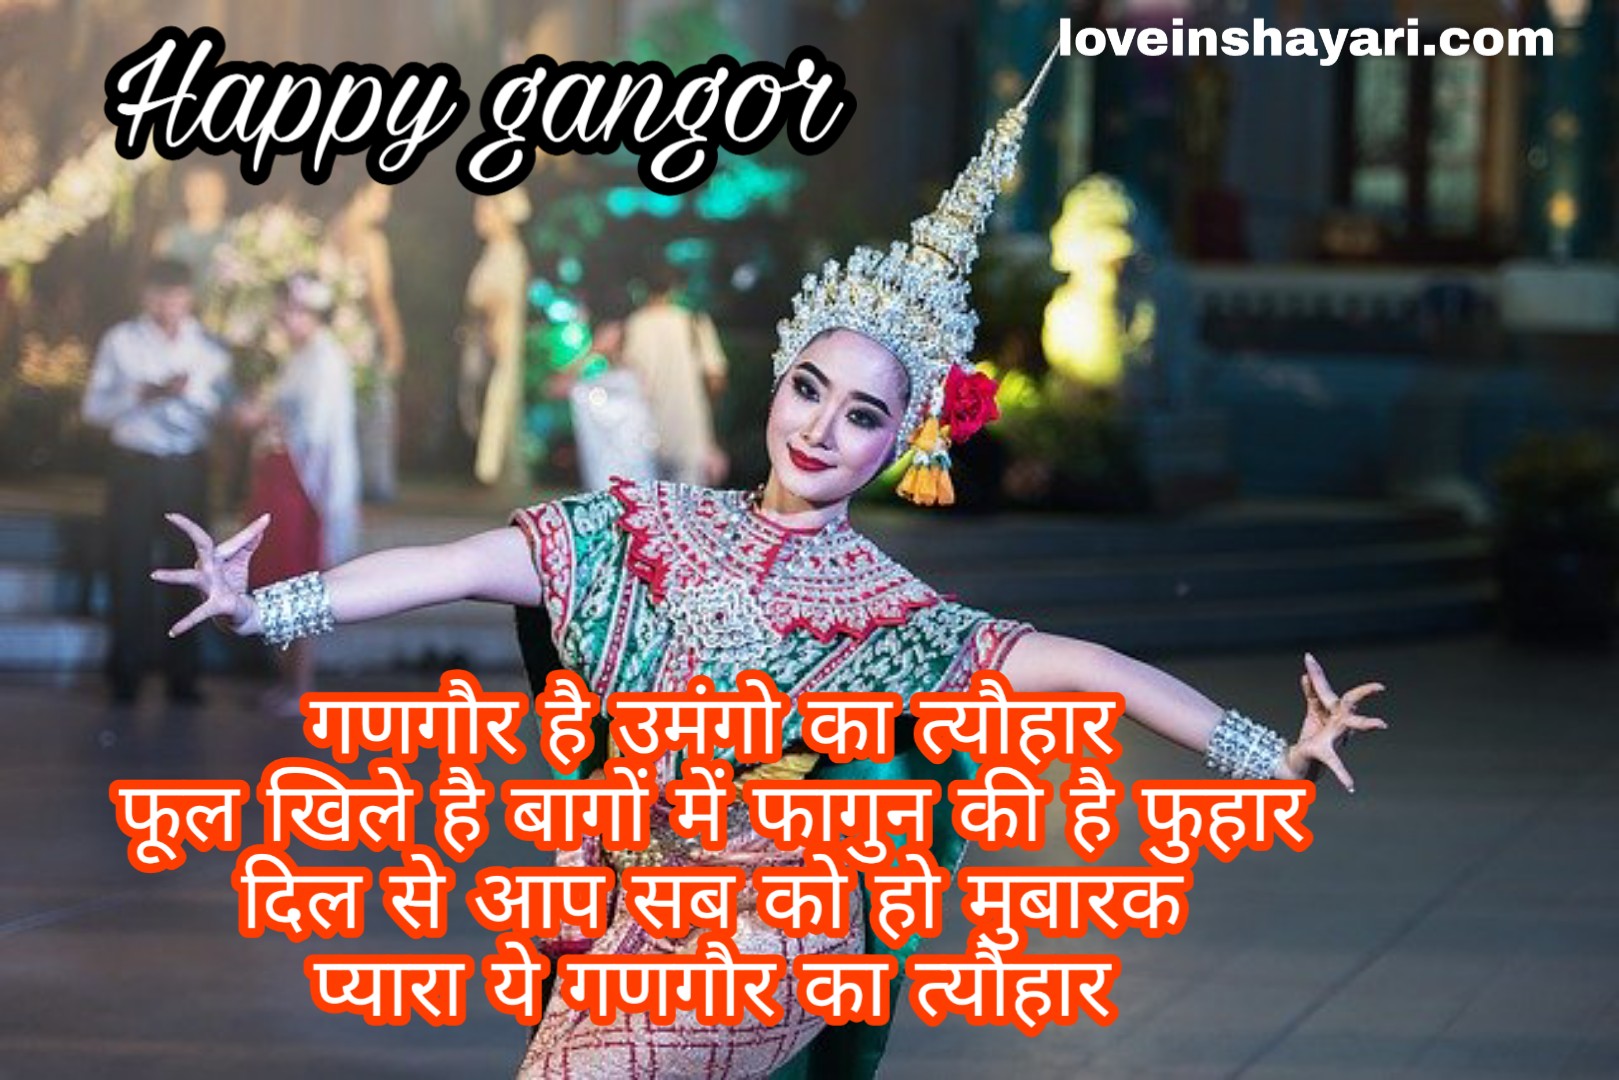 Gangor wishes shayari images message quotes